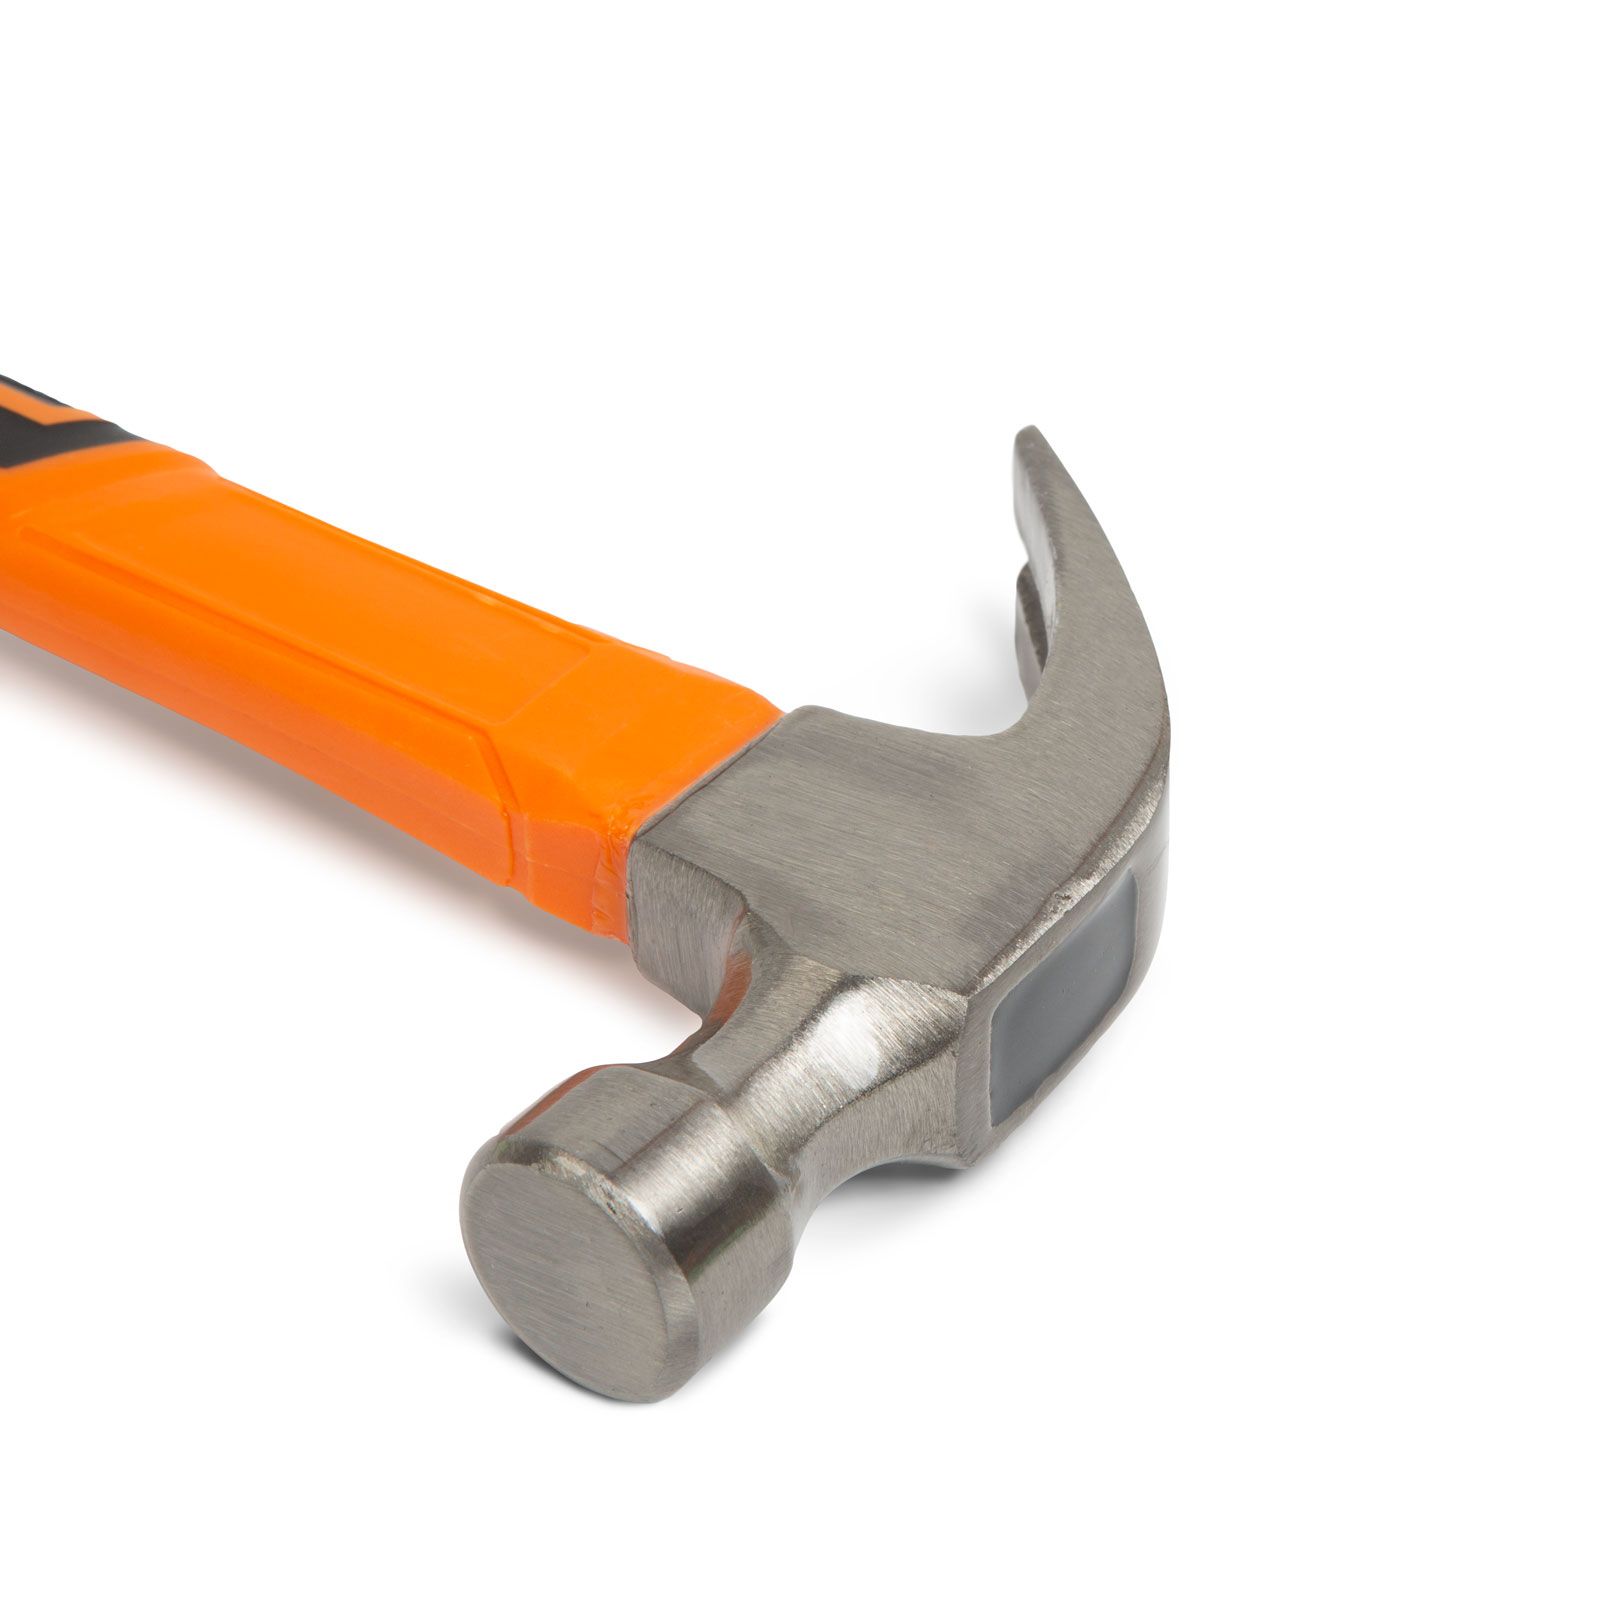 Professional claw hammer - 226 g thumb